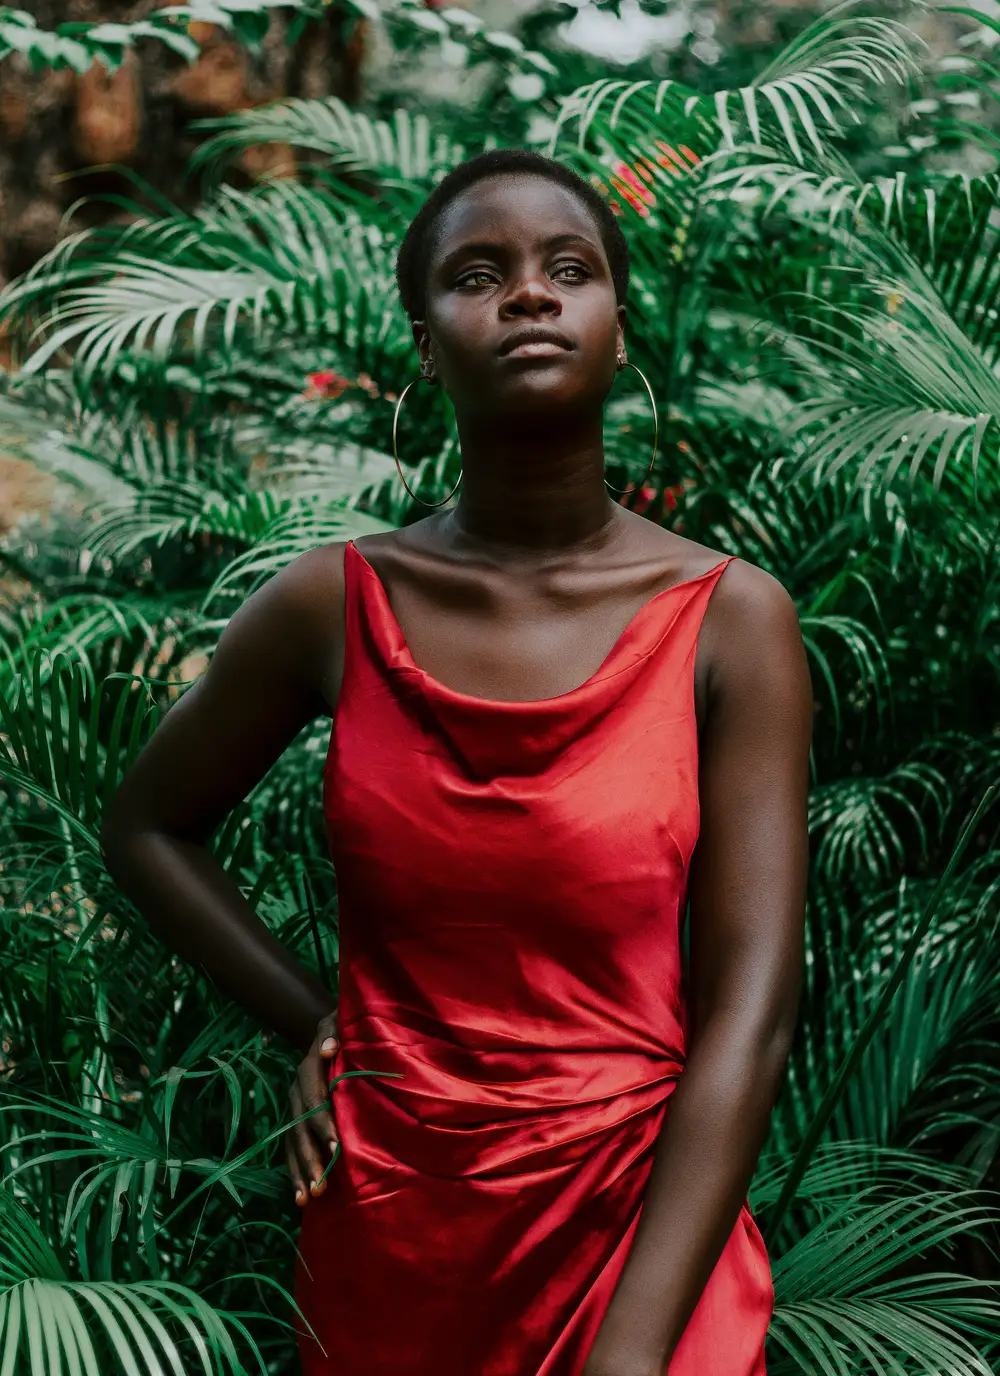 Beautiful black woman in a red dress posing in a garden